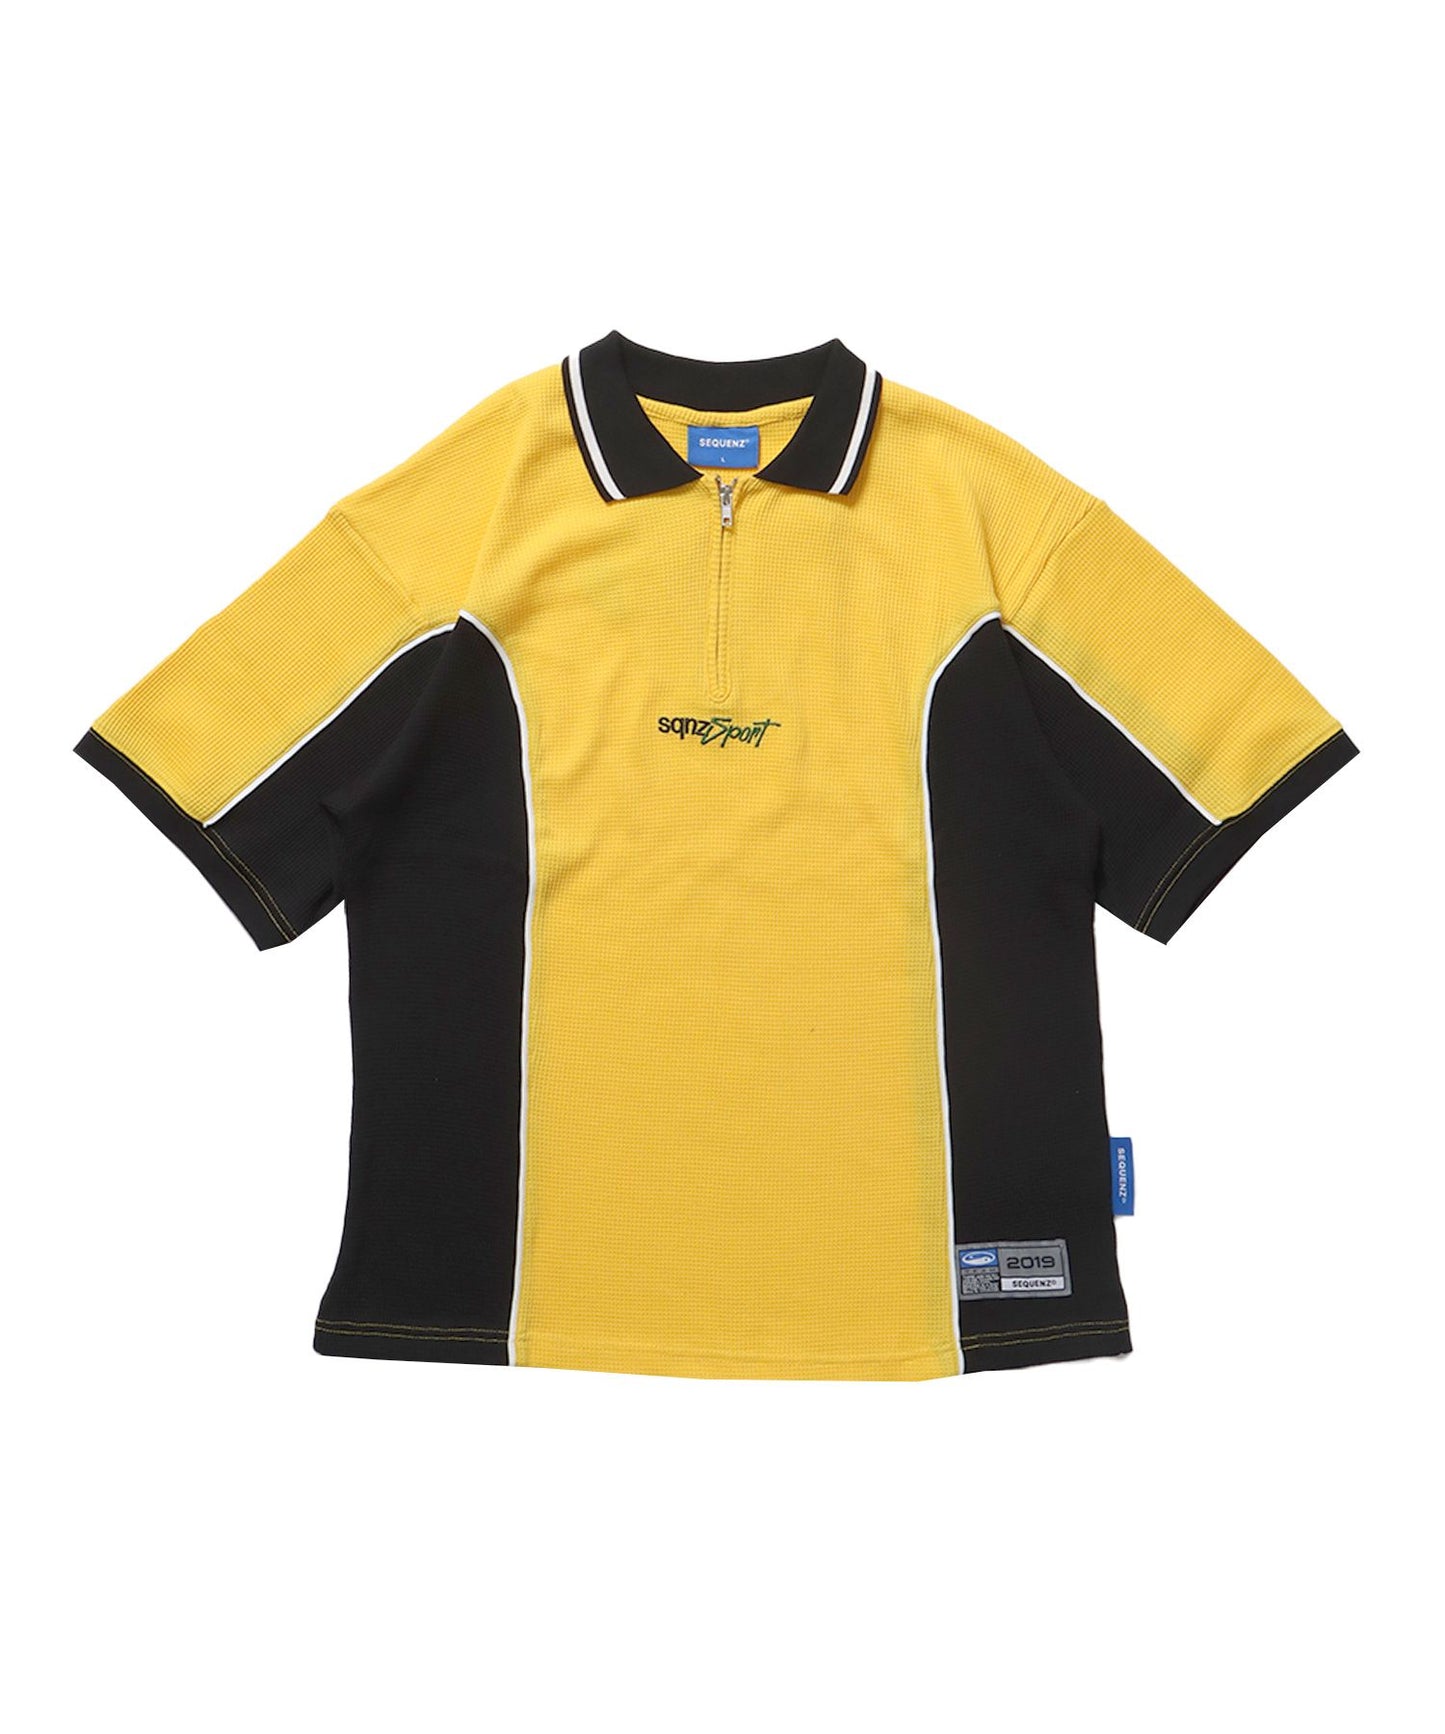 【SEQUENZ】SQNZ SPORT ZIP POLO S/S THERMAL / 衿付き ポロシャツ 配色 パイピング ブランドロゴ ワンポイント ハーフジップ スポーティー Tシャツ ゲームシャツ 襟ライン イエロー